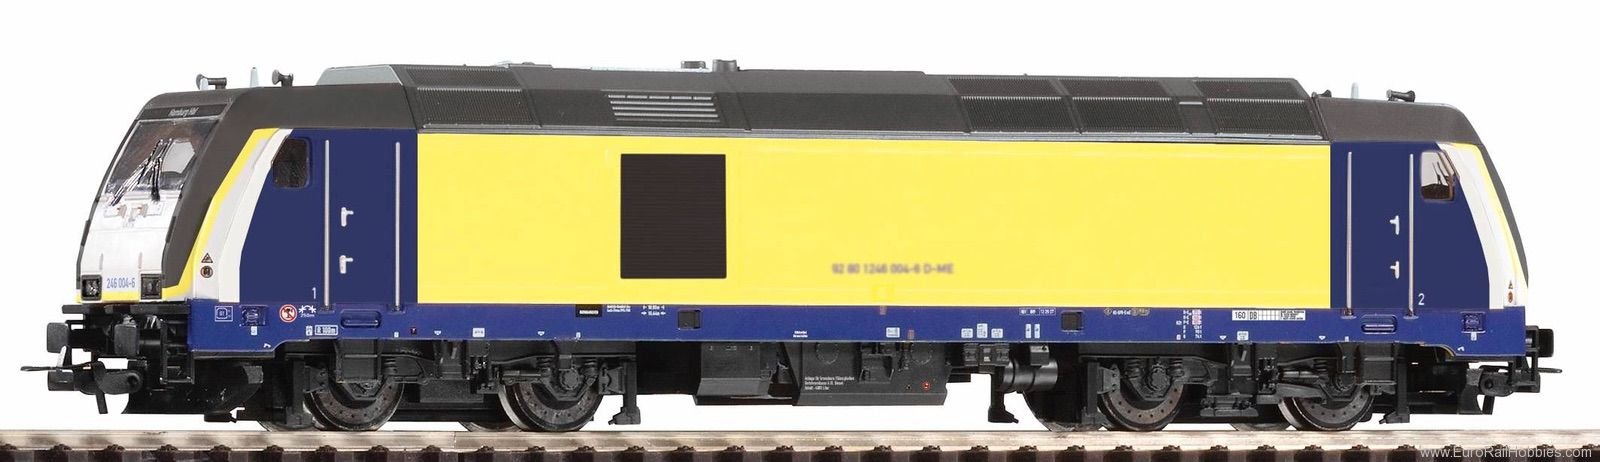 Piko 57344 Diesel Locomotive TRAXX Metronom VI AC versio